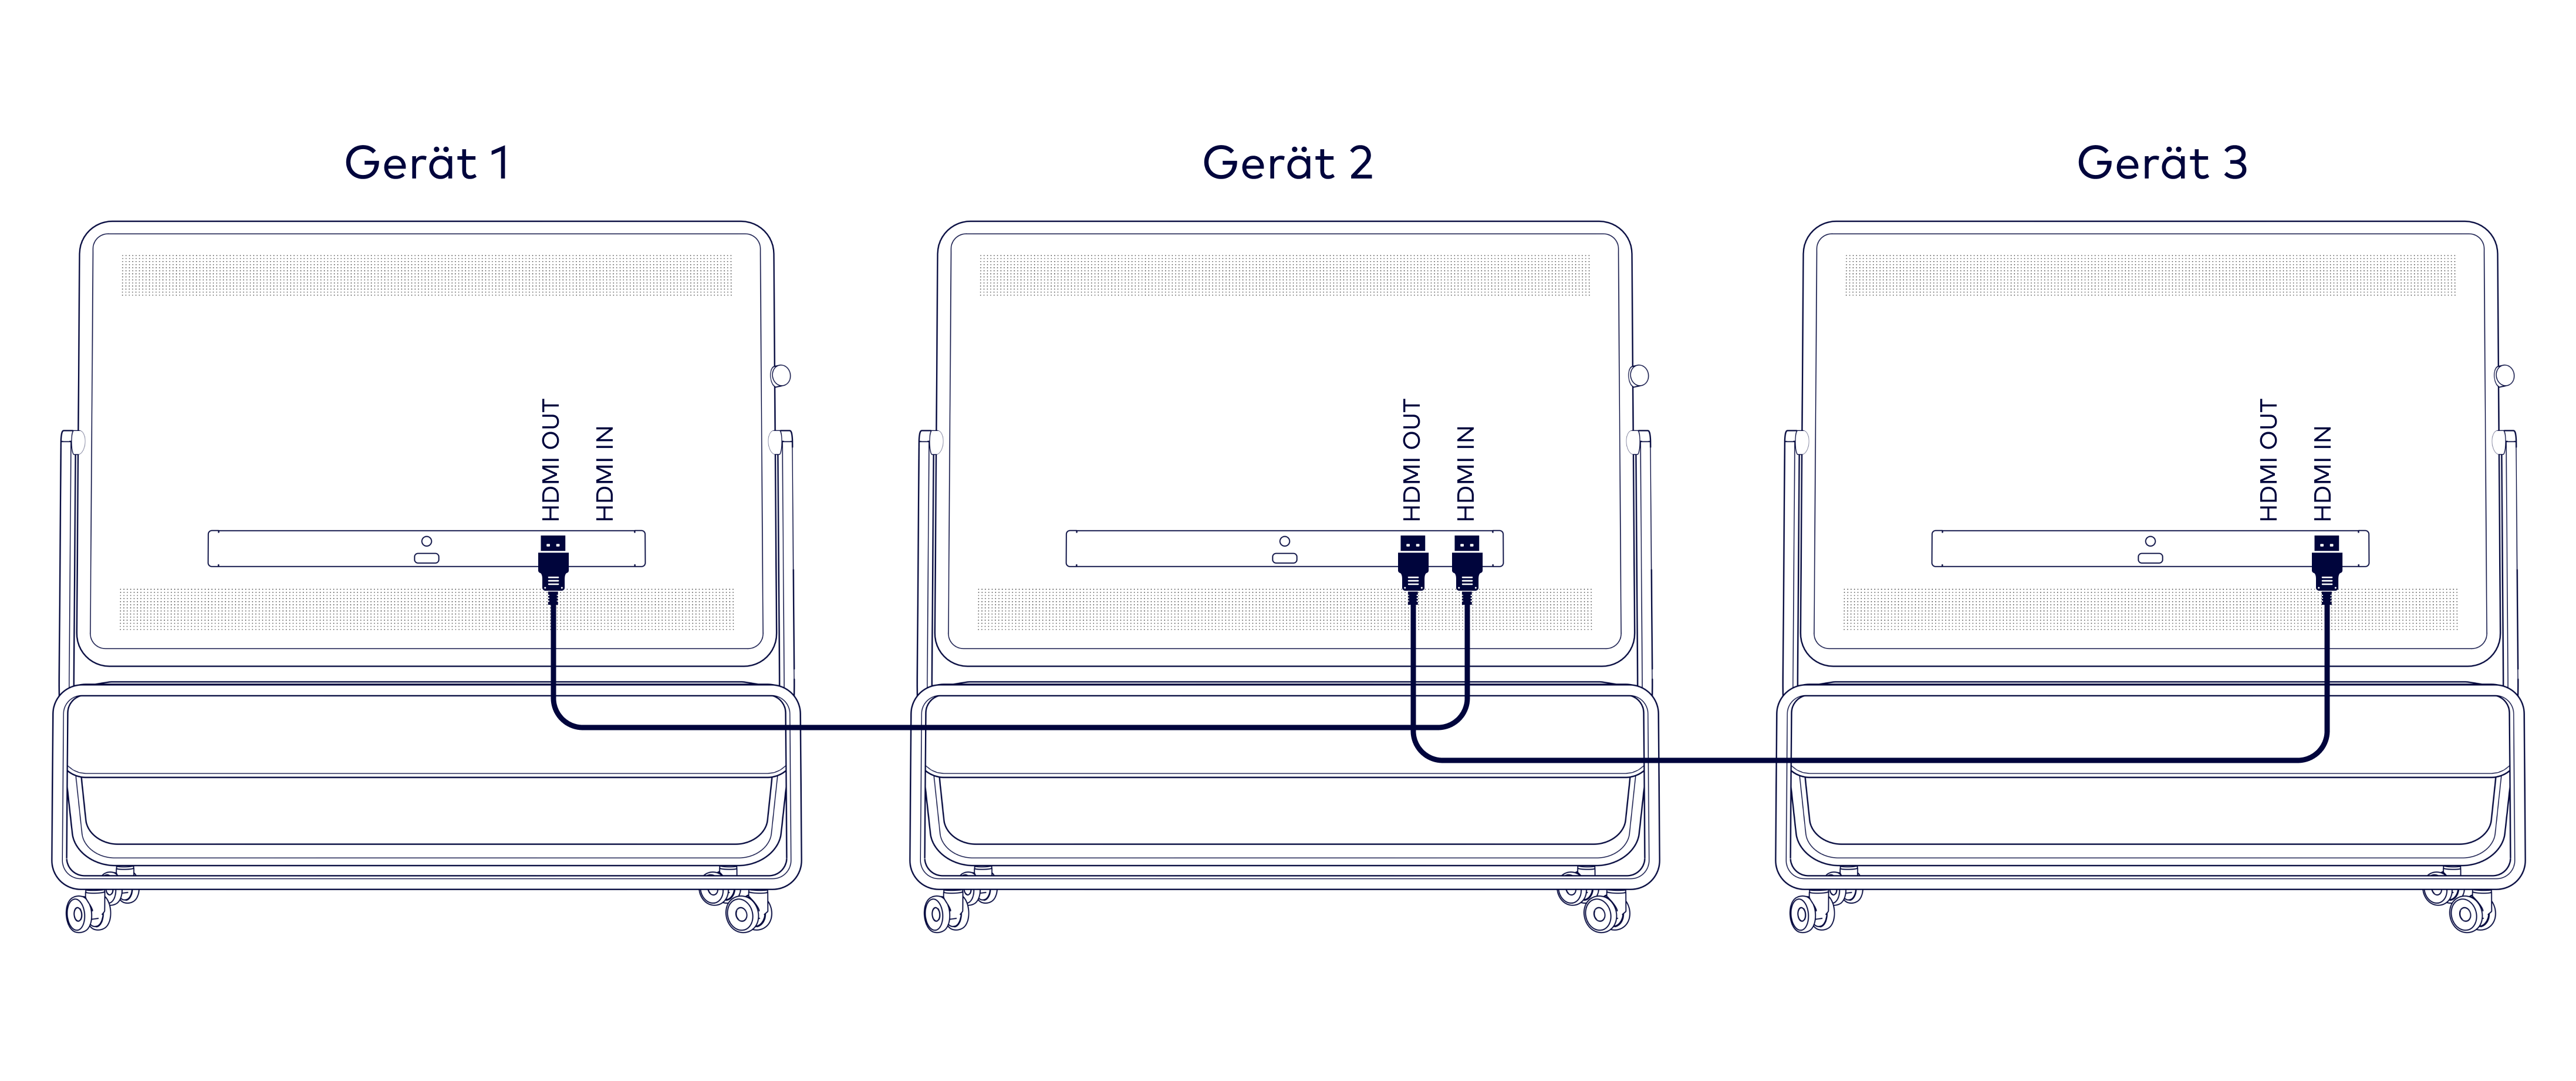 hdmi-out-device-wiring-scheme-de.png